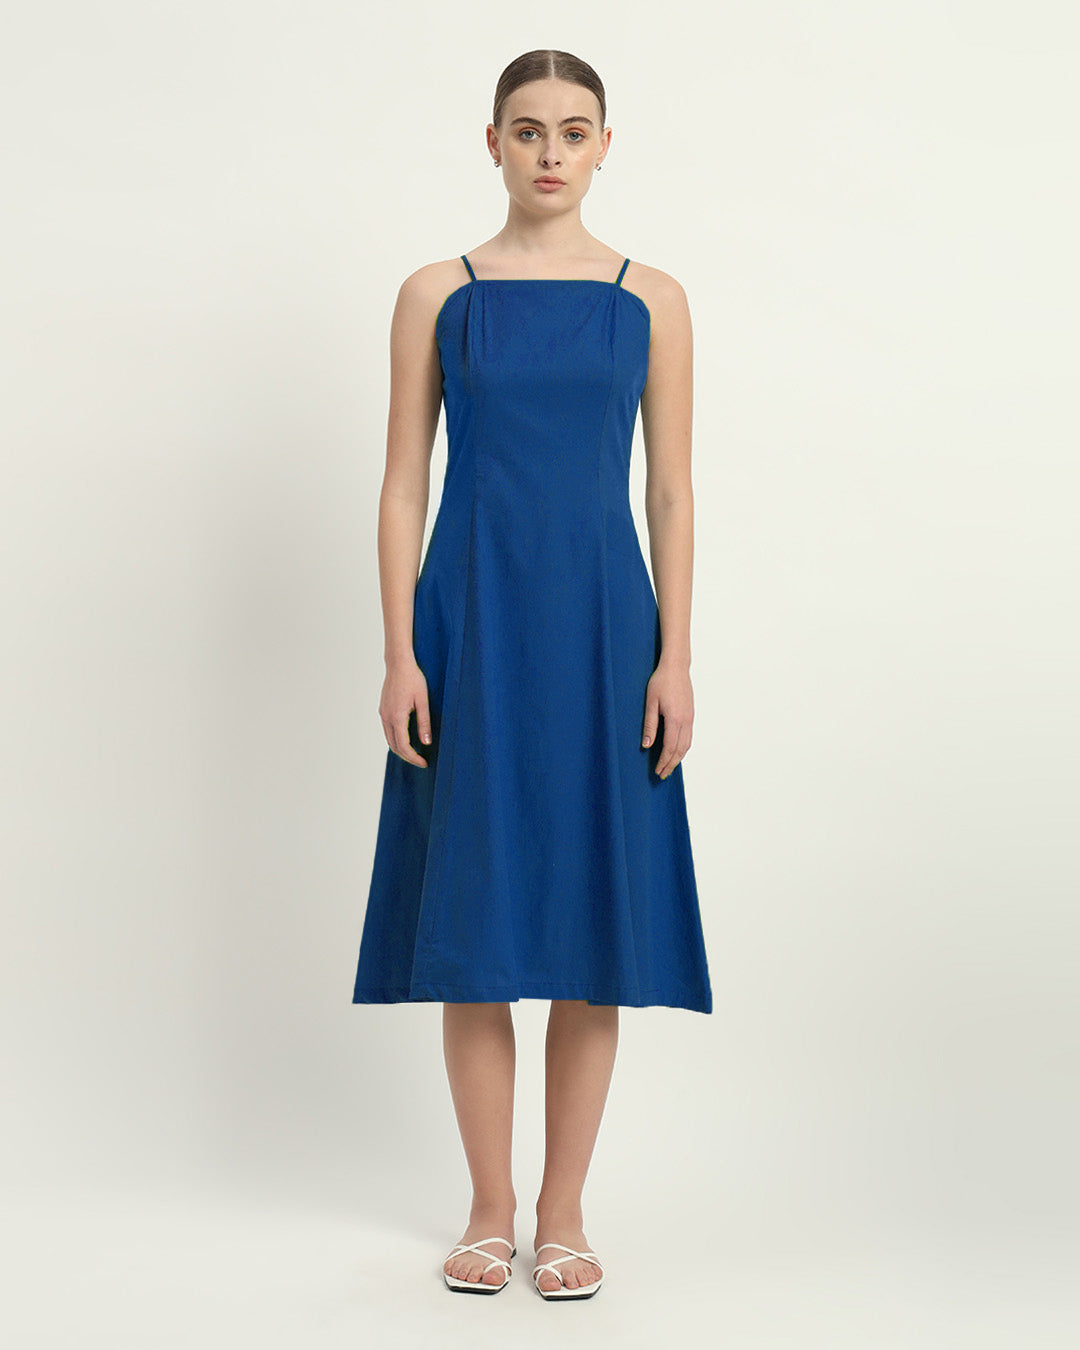 The Cobalt Valatie Cotton Dress